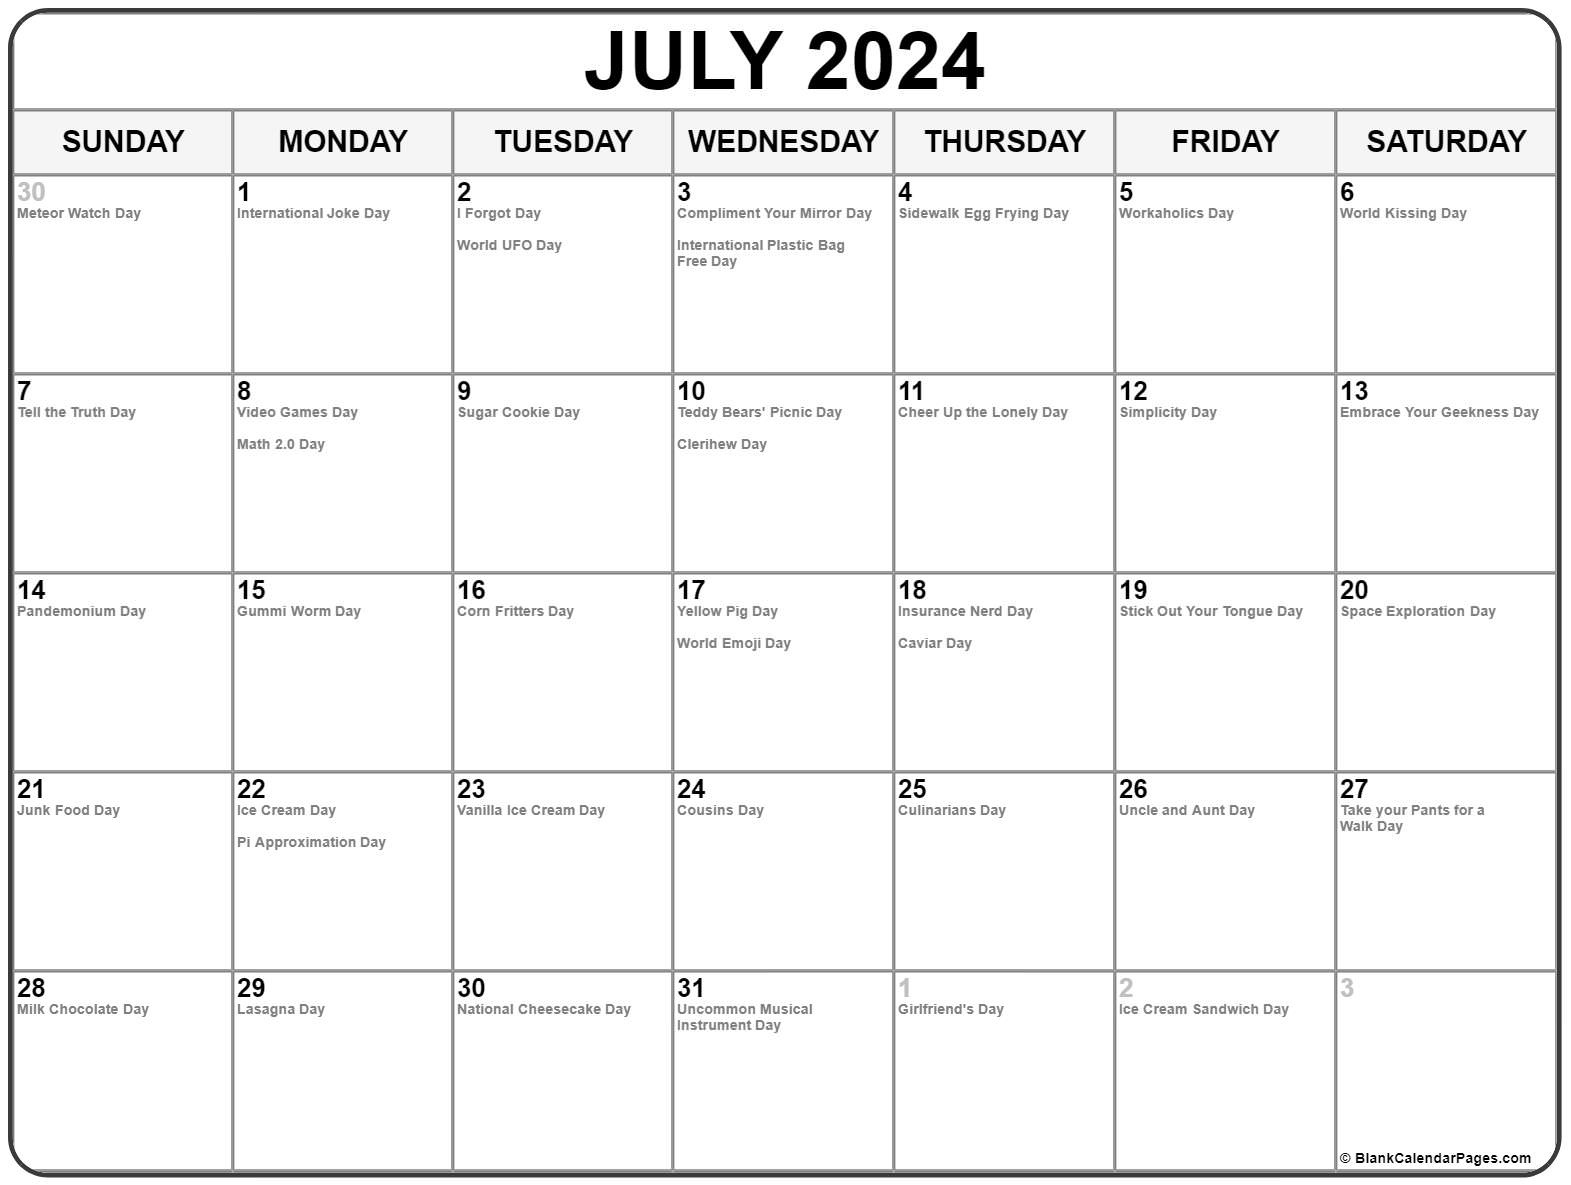 July 2024 With Holidays Calendar regarding July 19th Holiday Calendar 2024